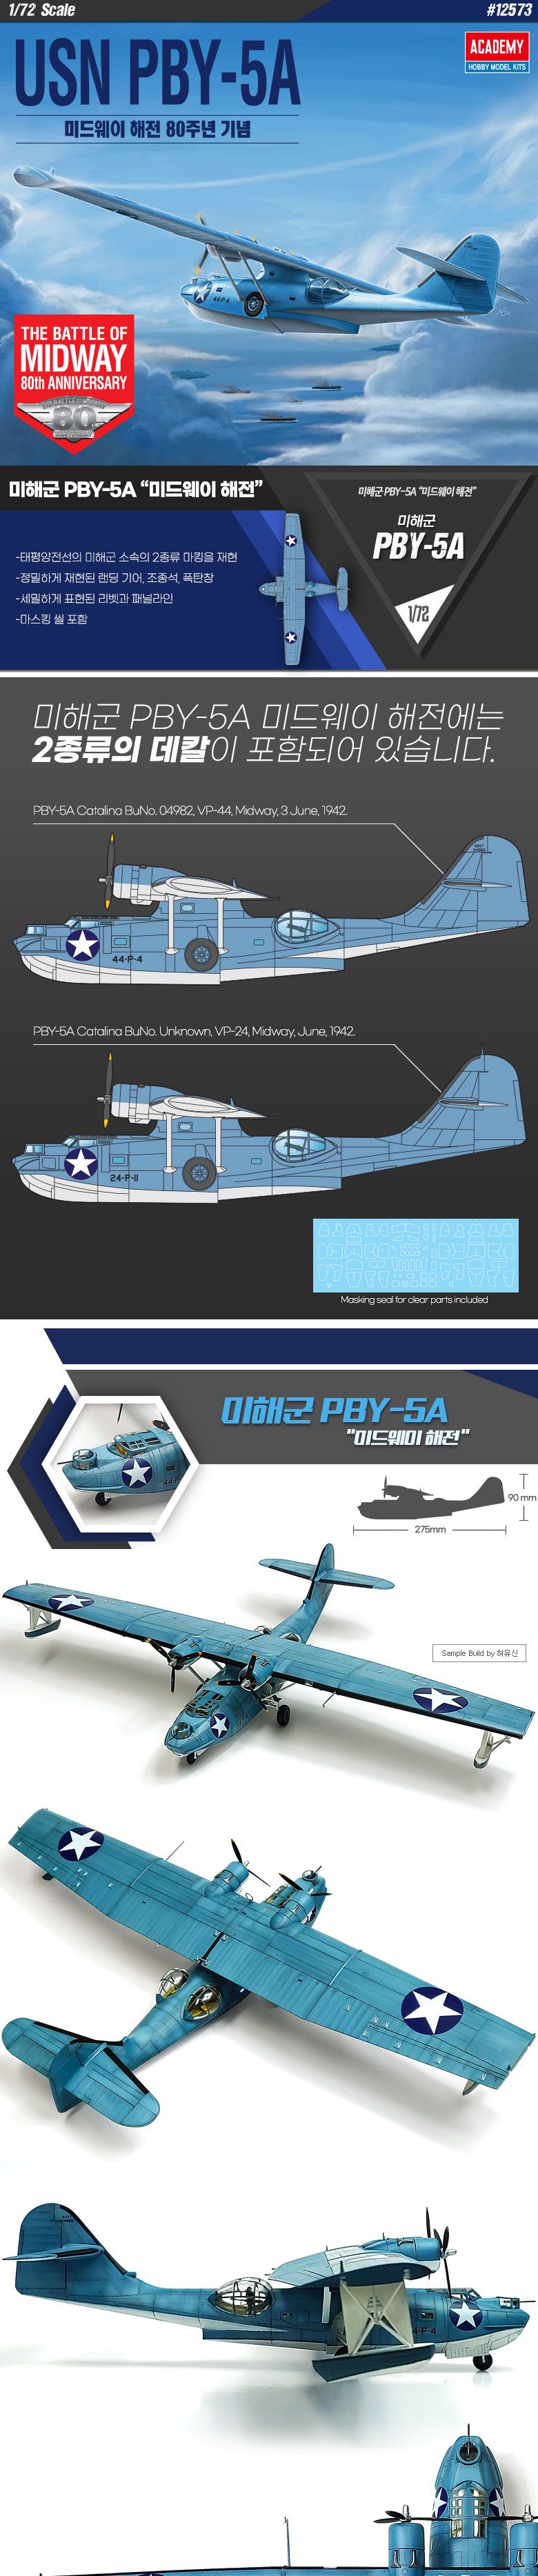 1of72 ر PBY5A ̵  ǱԾ  峭 ϱ ǱԾ ǱԾ ǱԾ 峭   ÿǱԾ ̴Ͼ